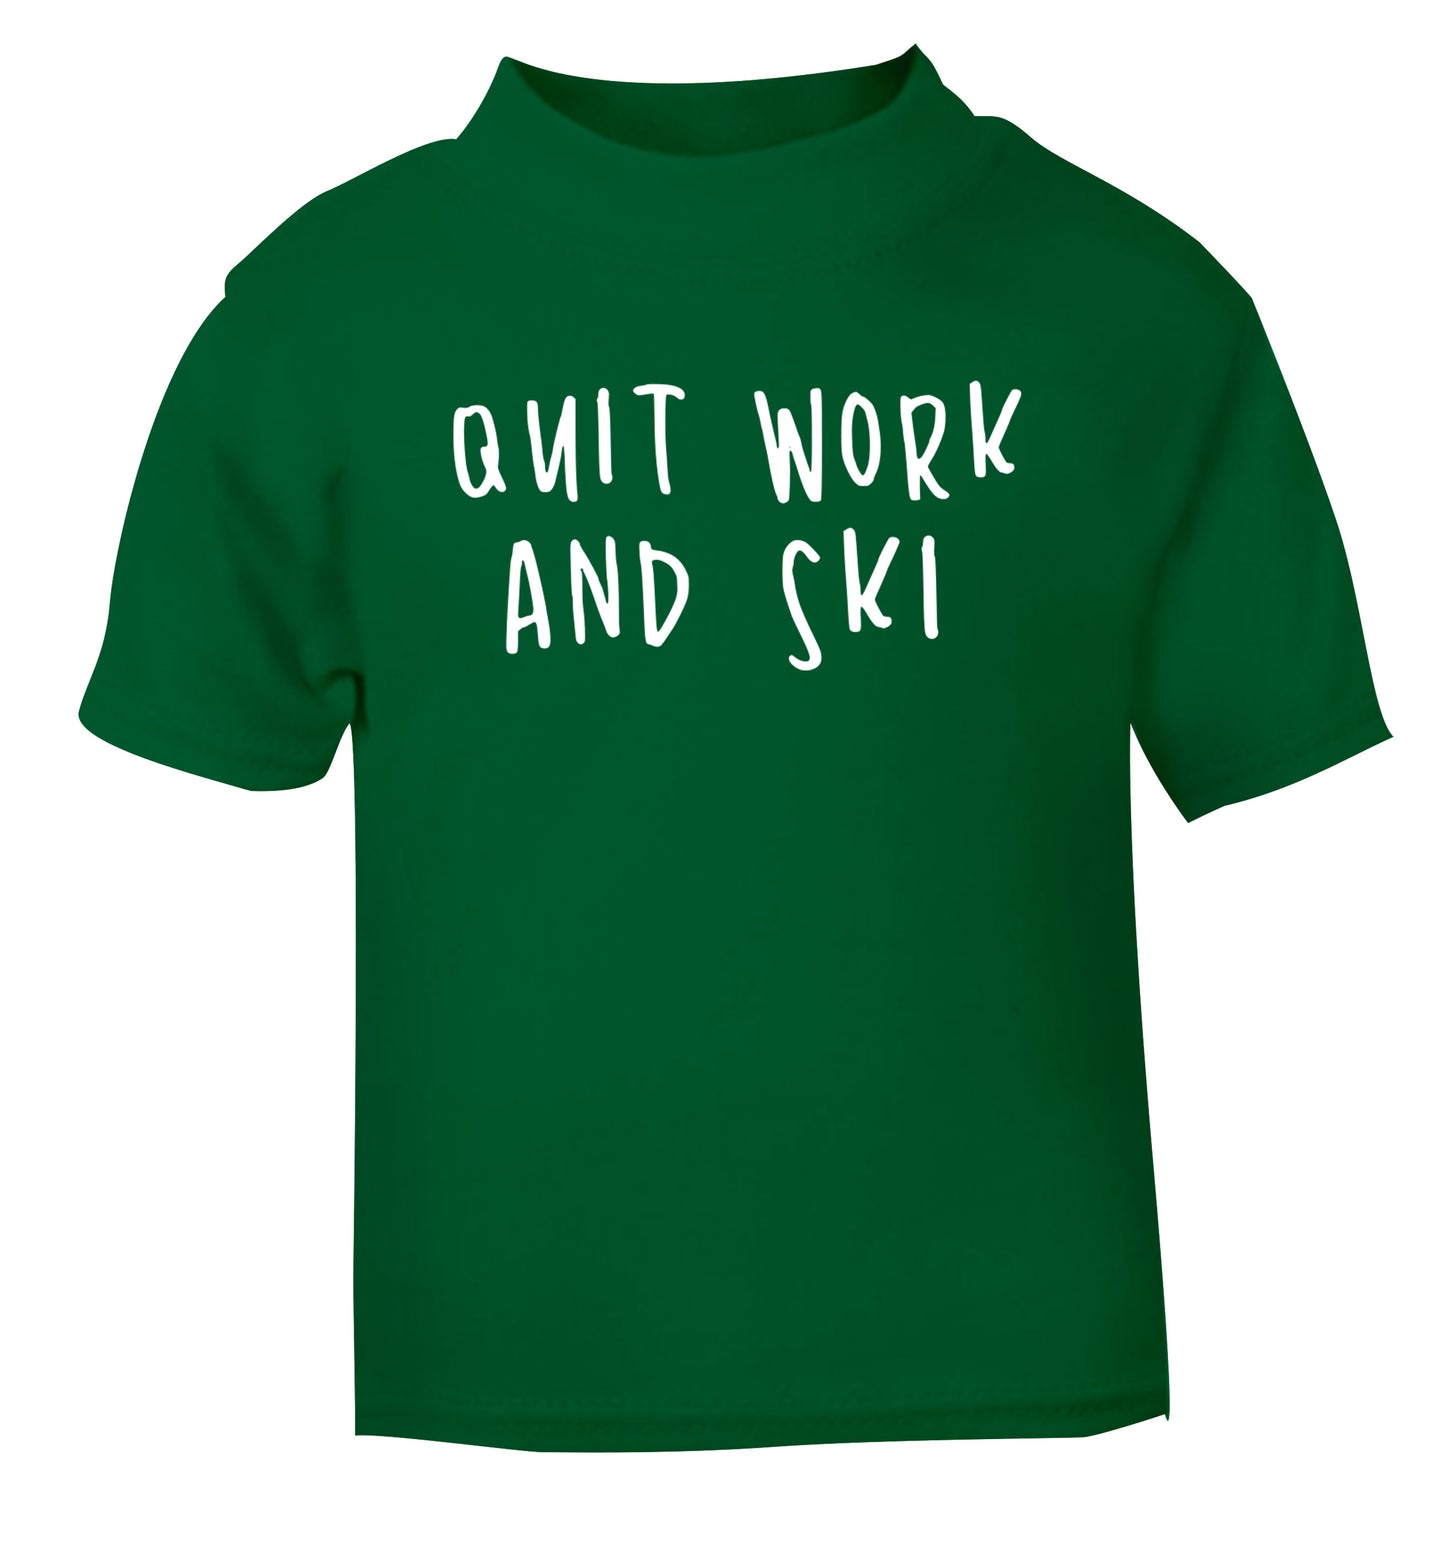 Quit work and ski green Baby Toddler Tshirt 2 Years